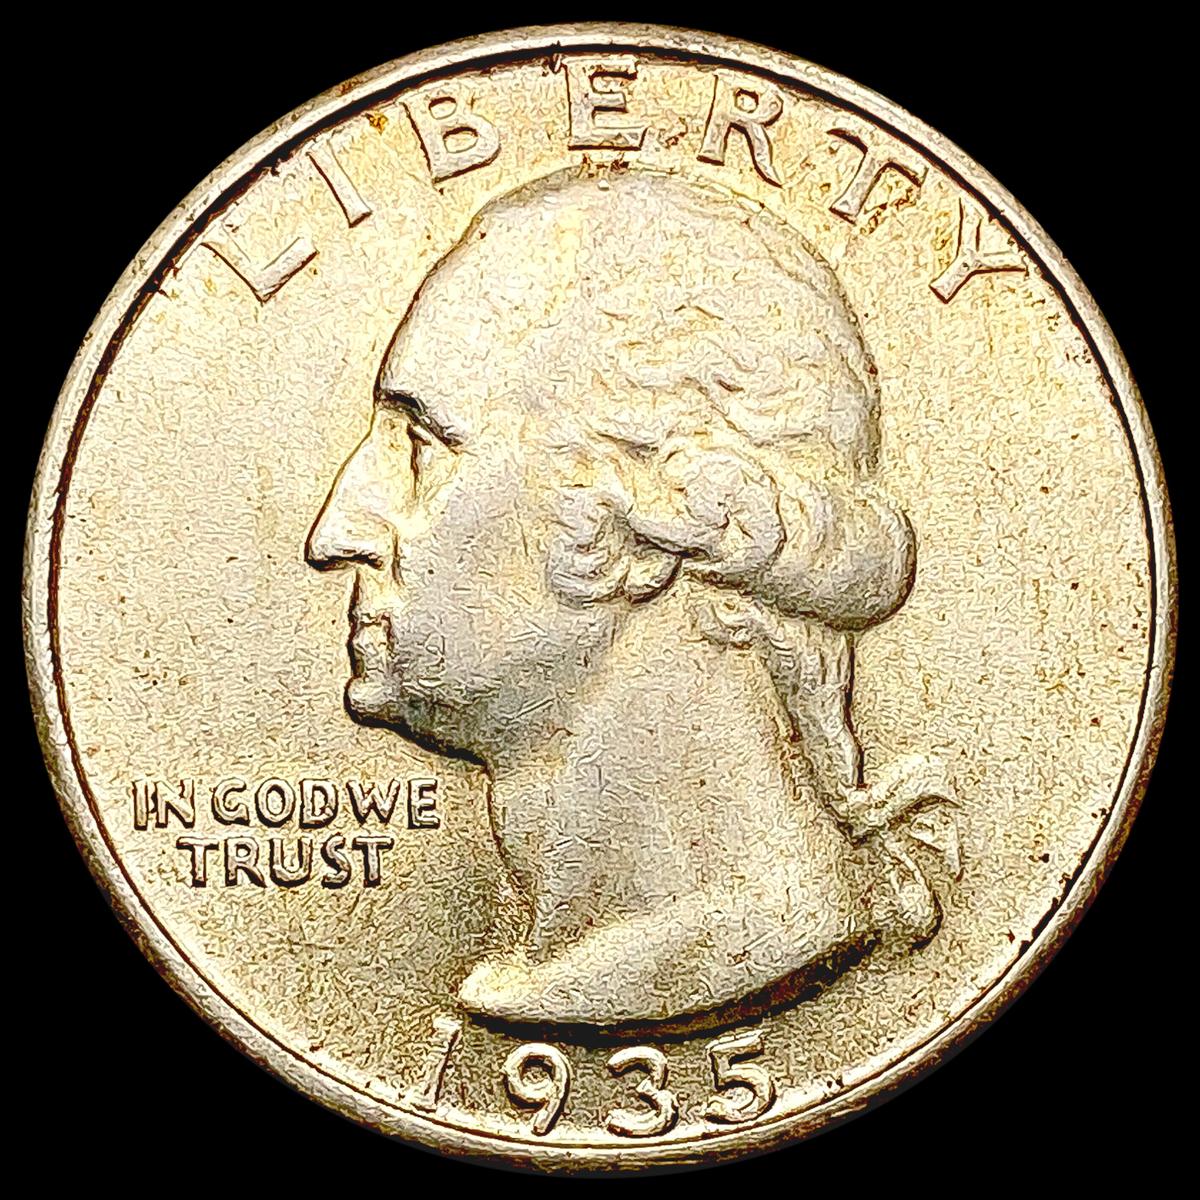 1935 Washington Silver Quarter CHOICE AU